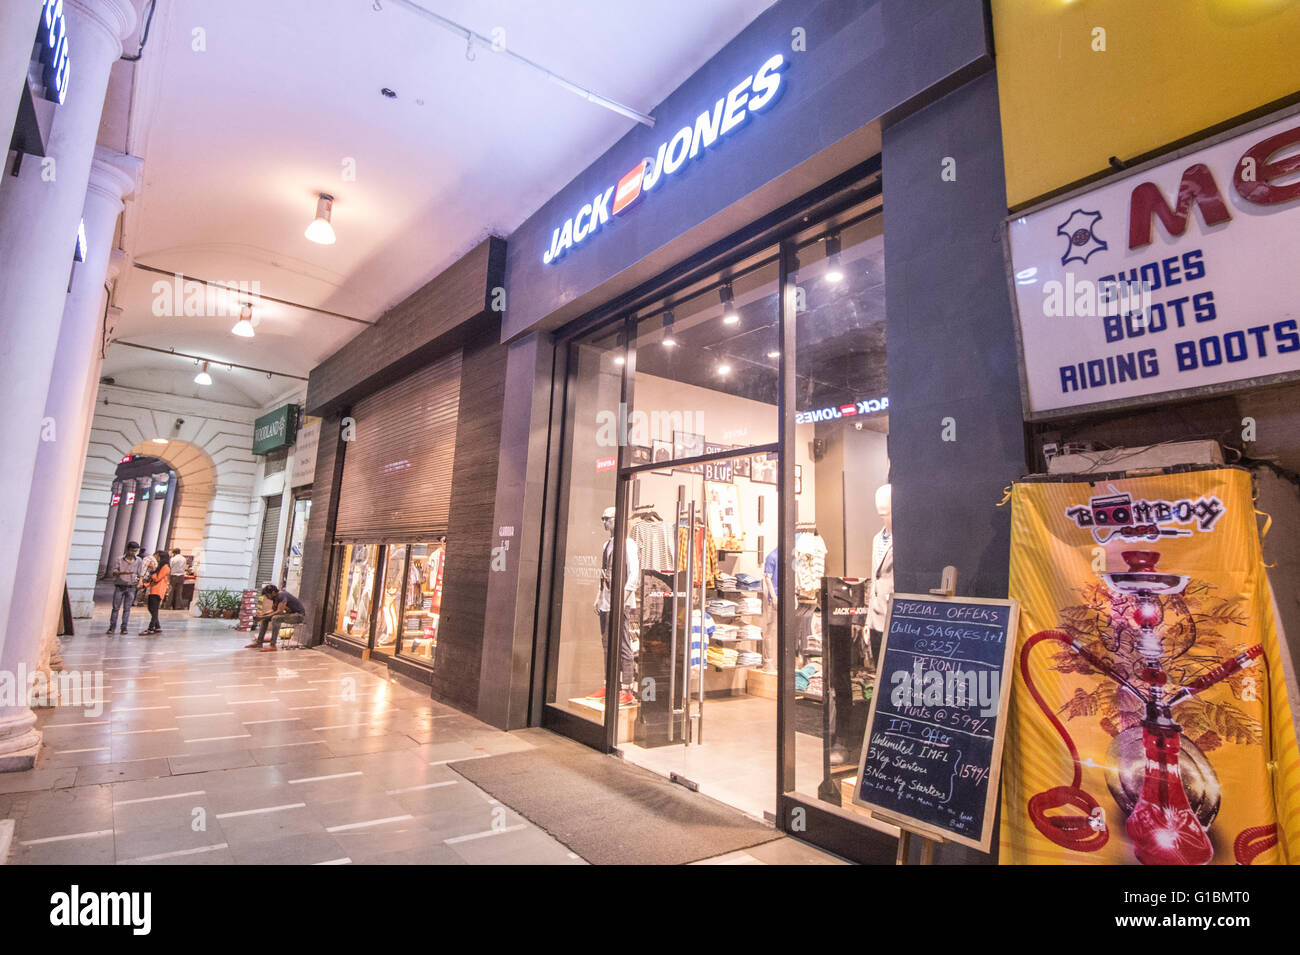 A general view of retail shop chain Jack Jones in Delhi, India.  Credit: Euan Cherry Stock Photo